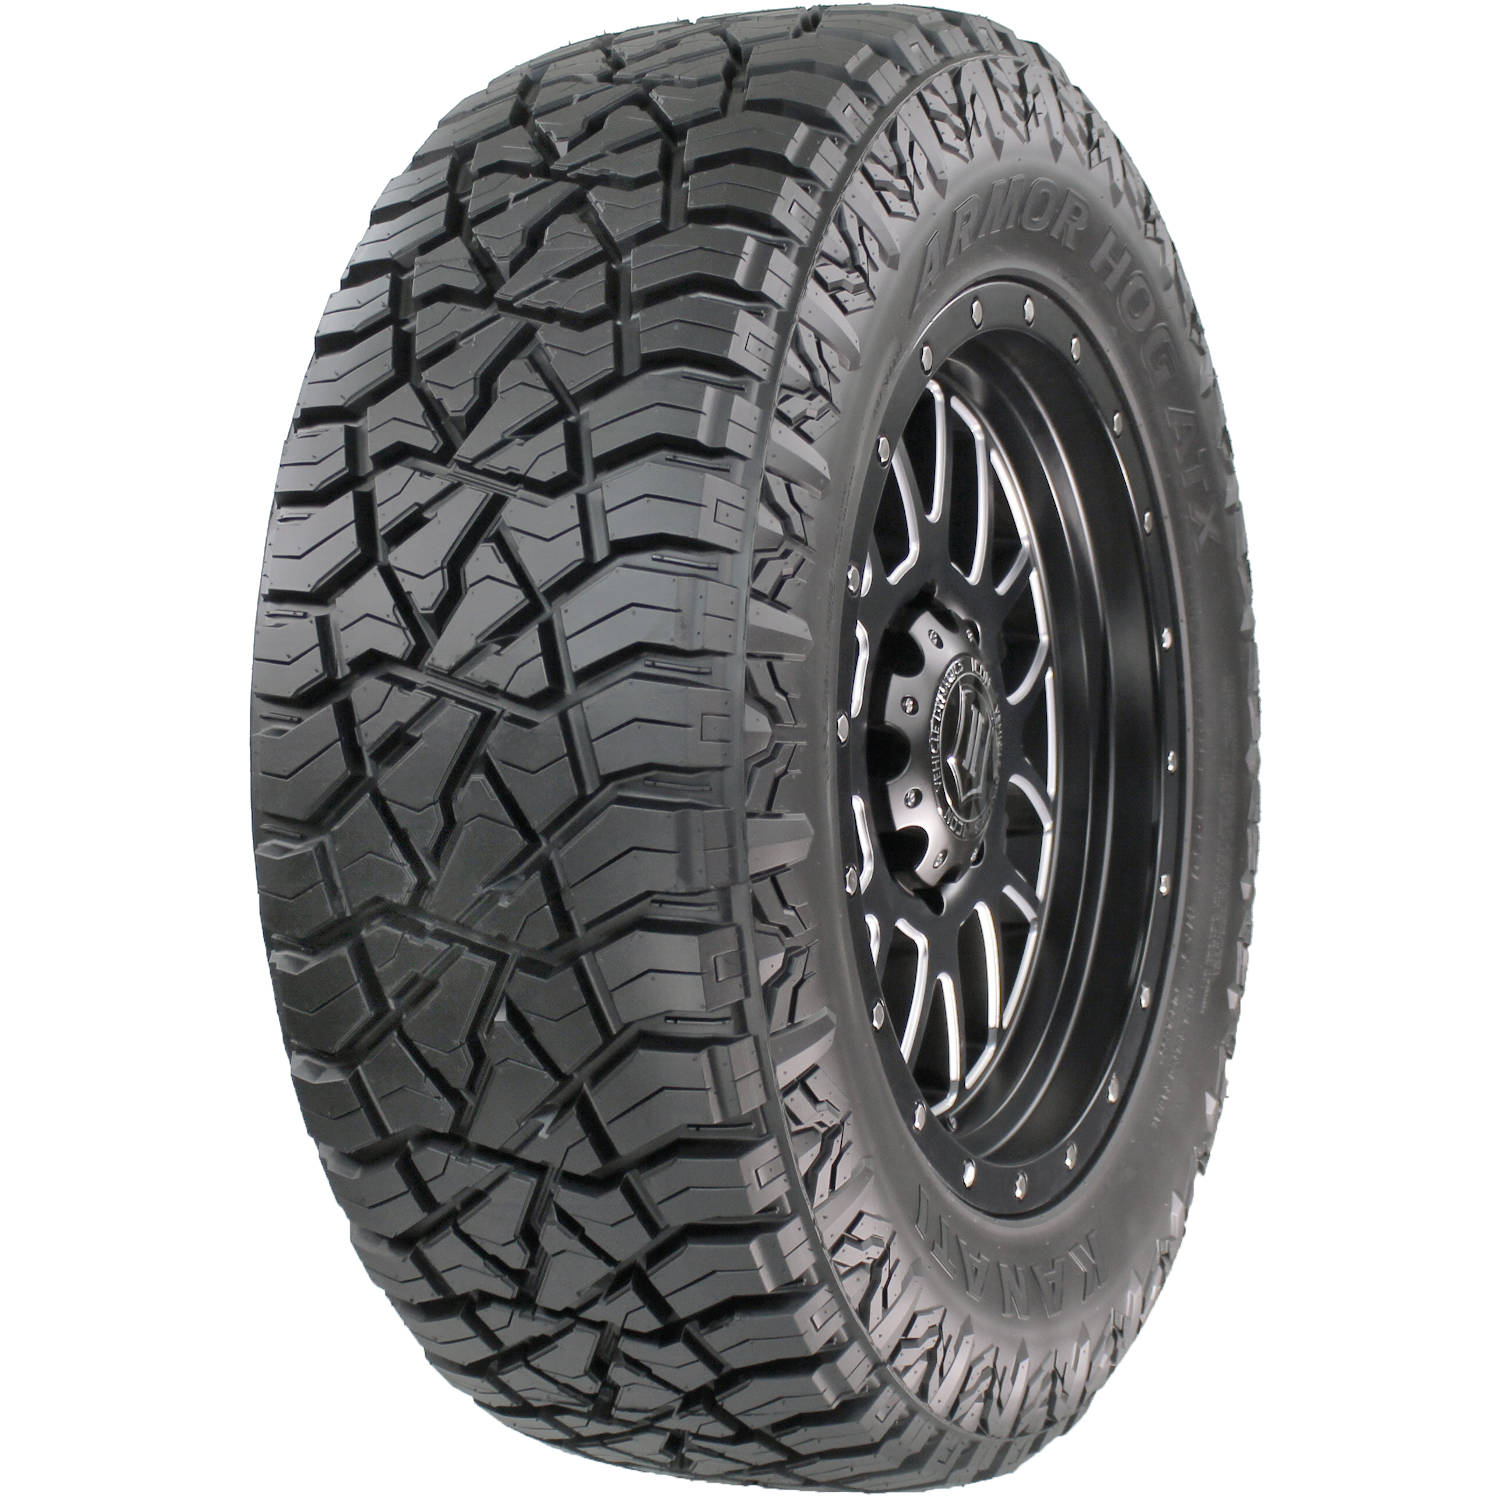 KANATI ARMOR HOG ATX LT275/60R20 (33.3X10.8R 20) Tires